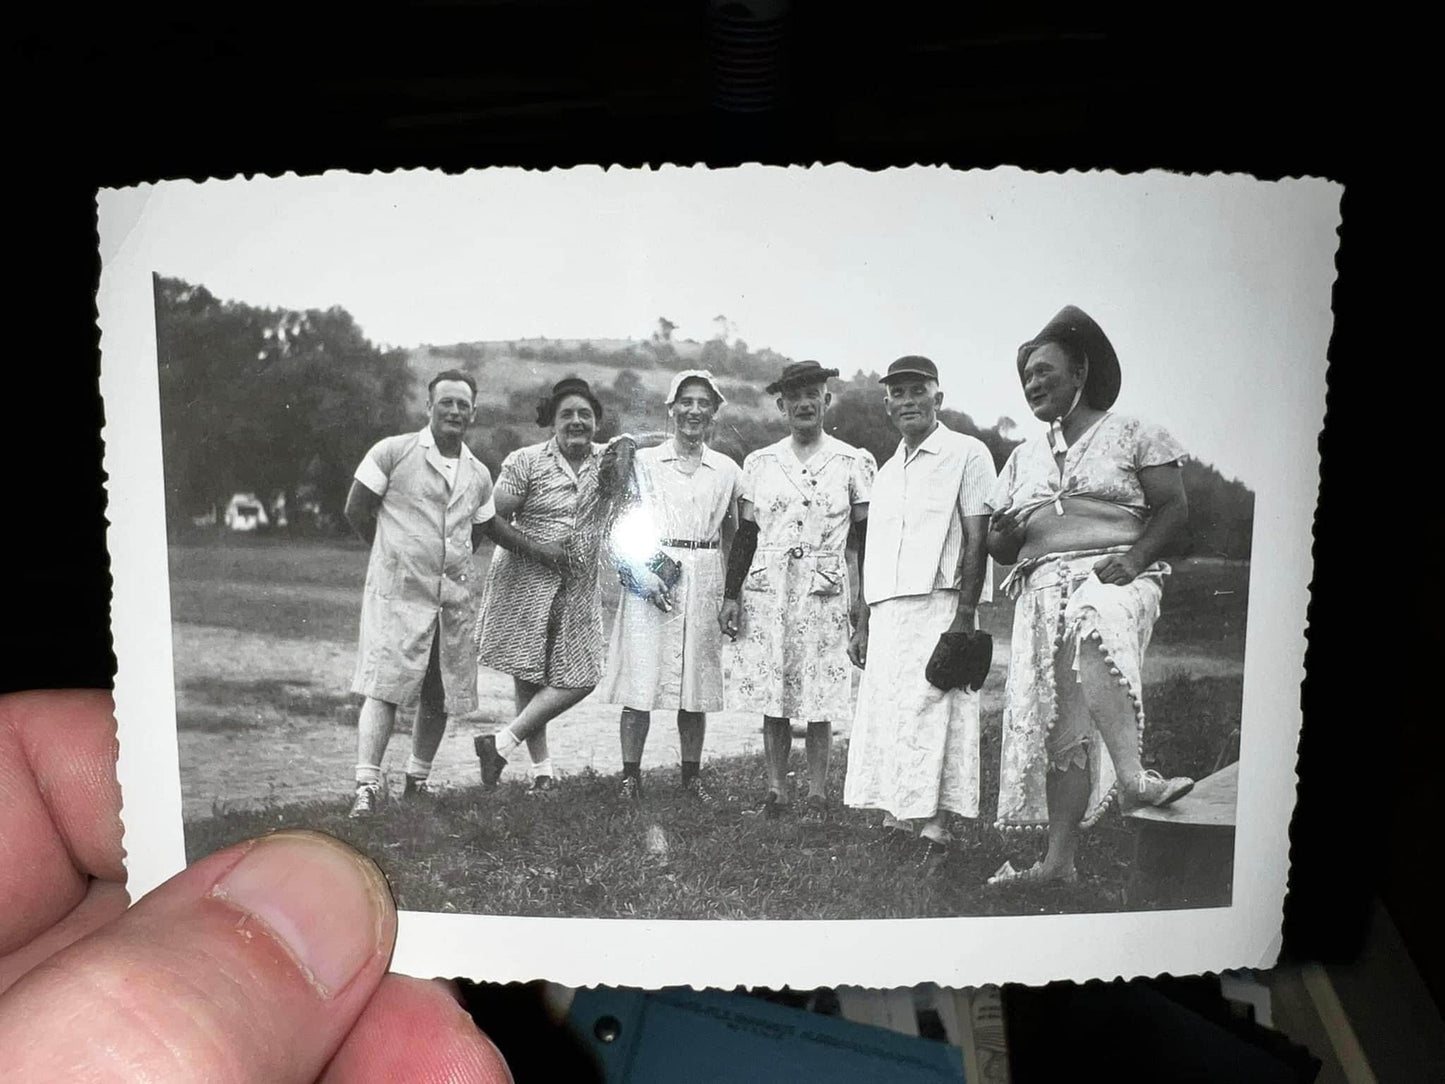 Vintage snapshot photo Cross dressing baseball team Westfield Pennsylvania lions All idd sports photography 1940s